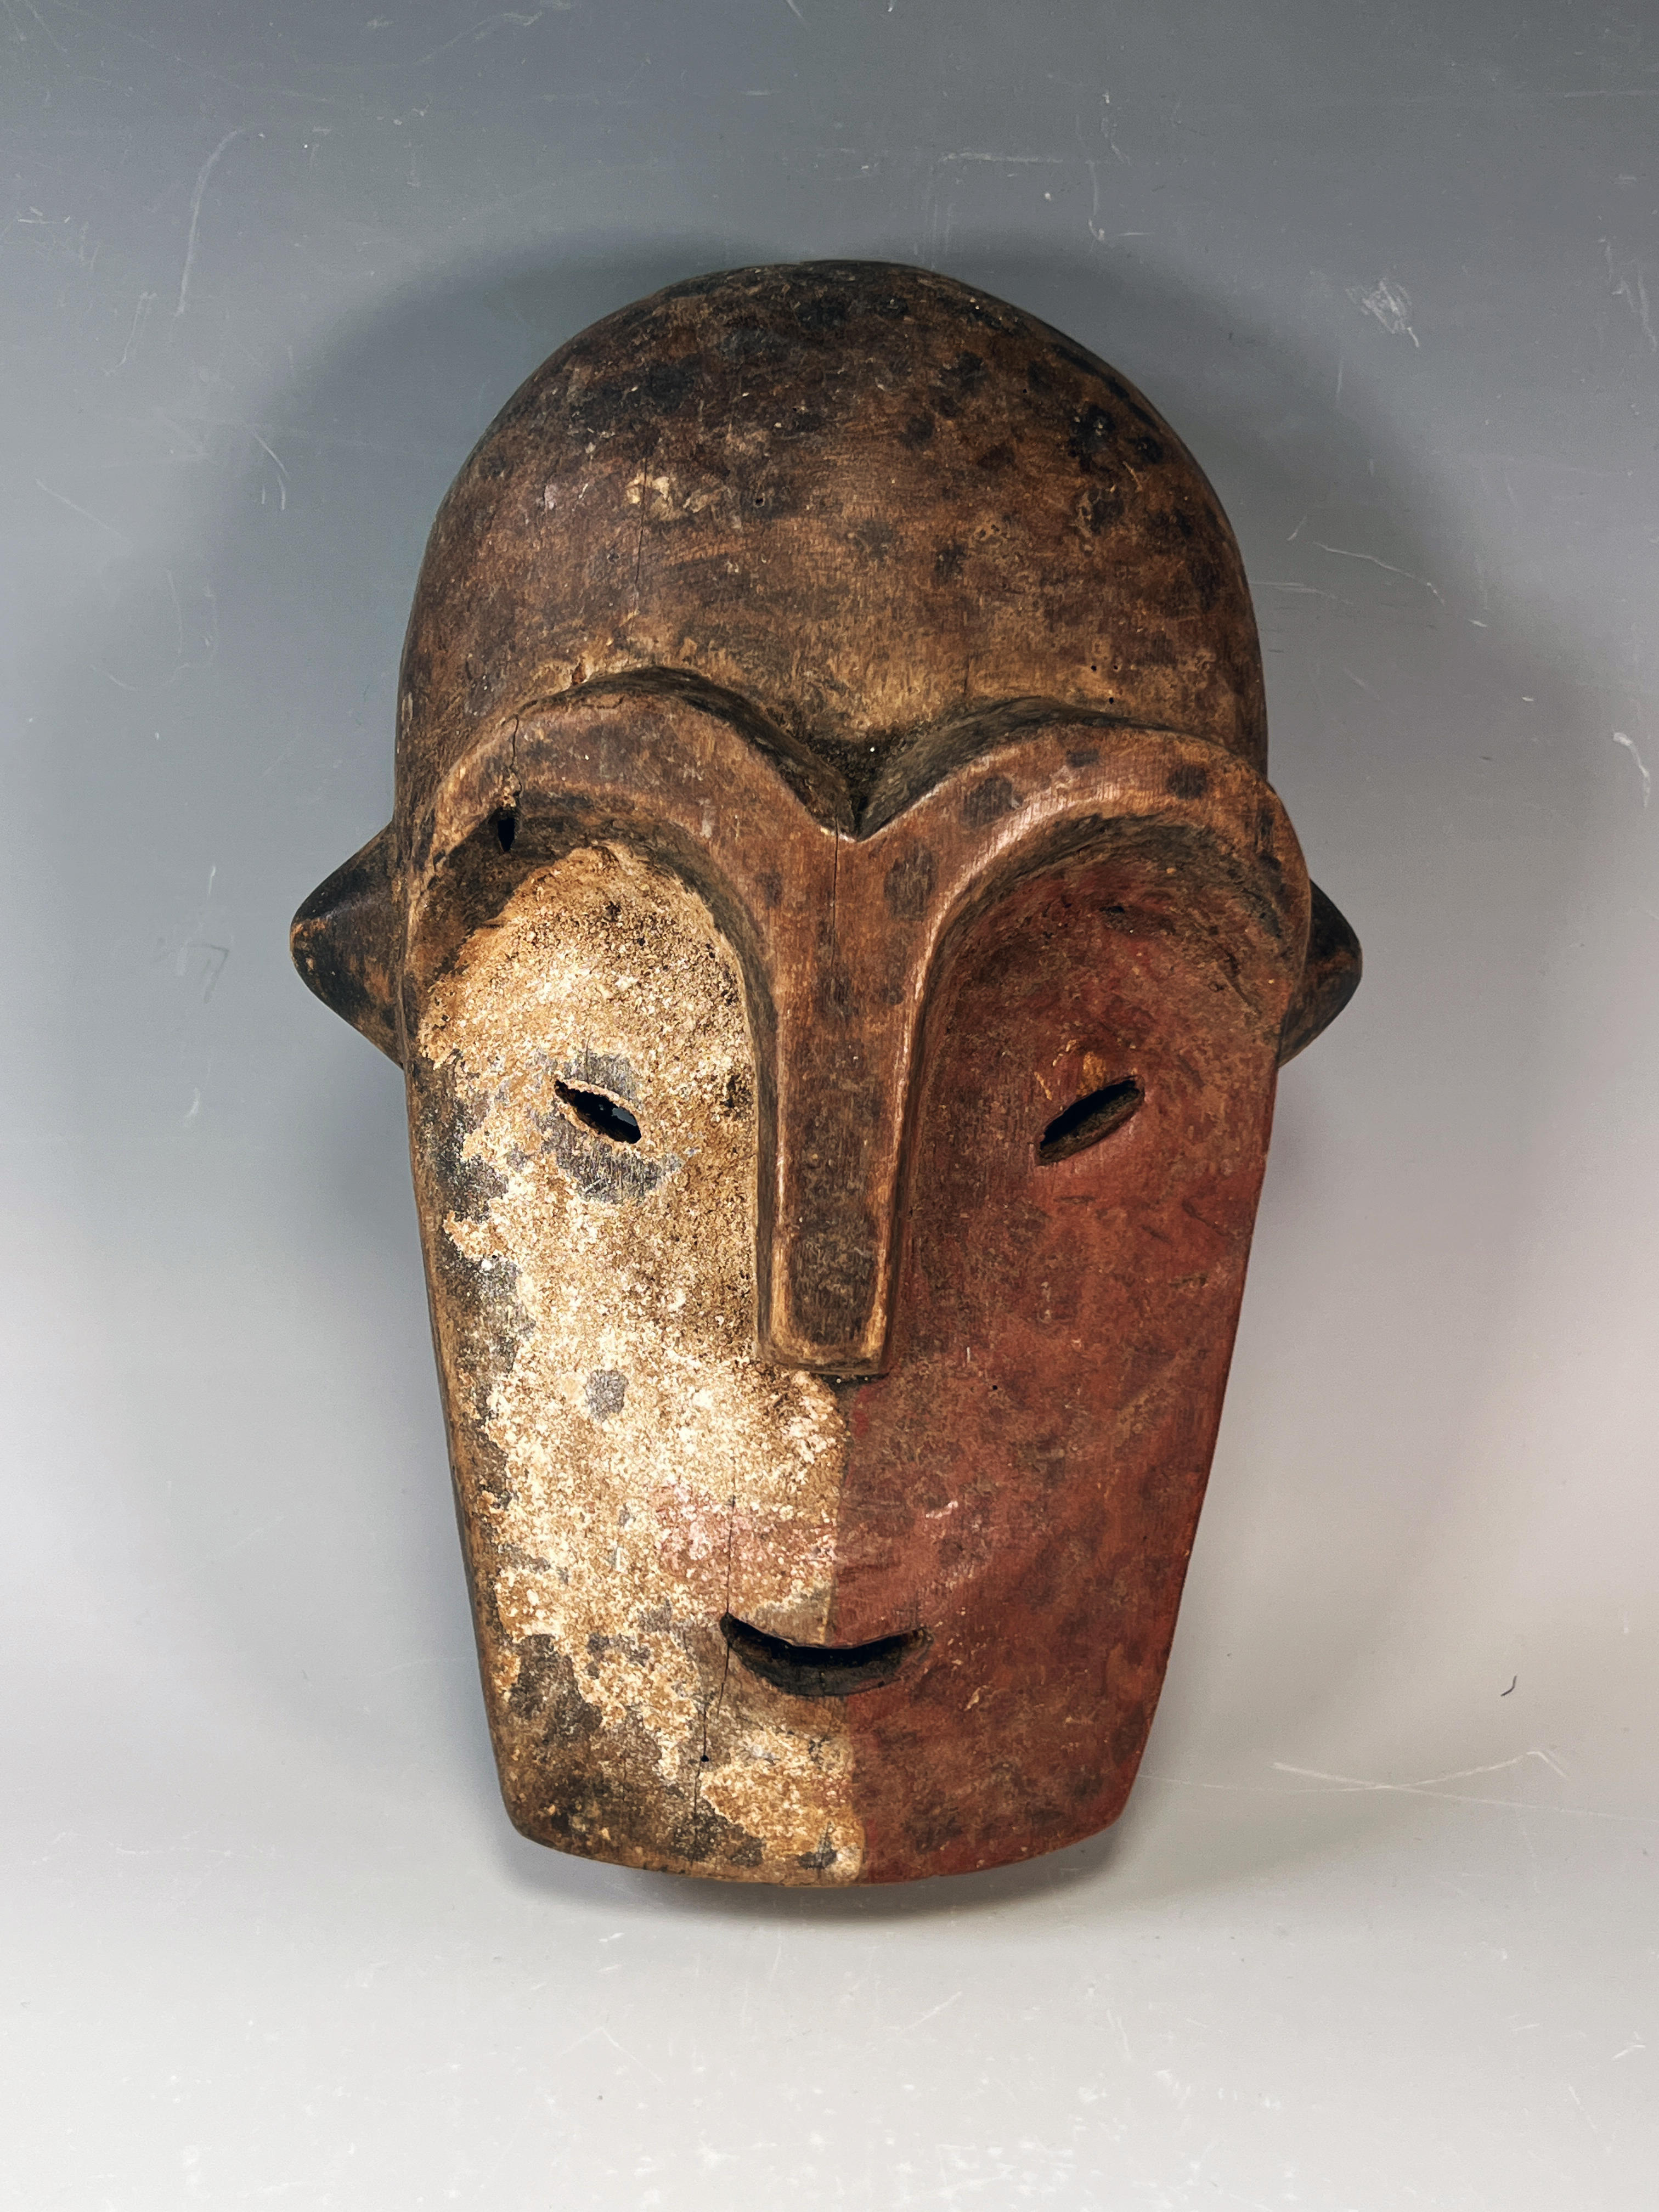 Lengola Mask Congo Central Africa image 1